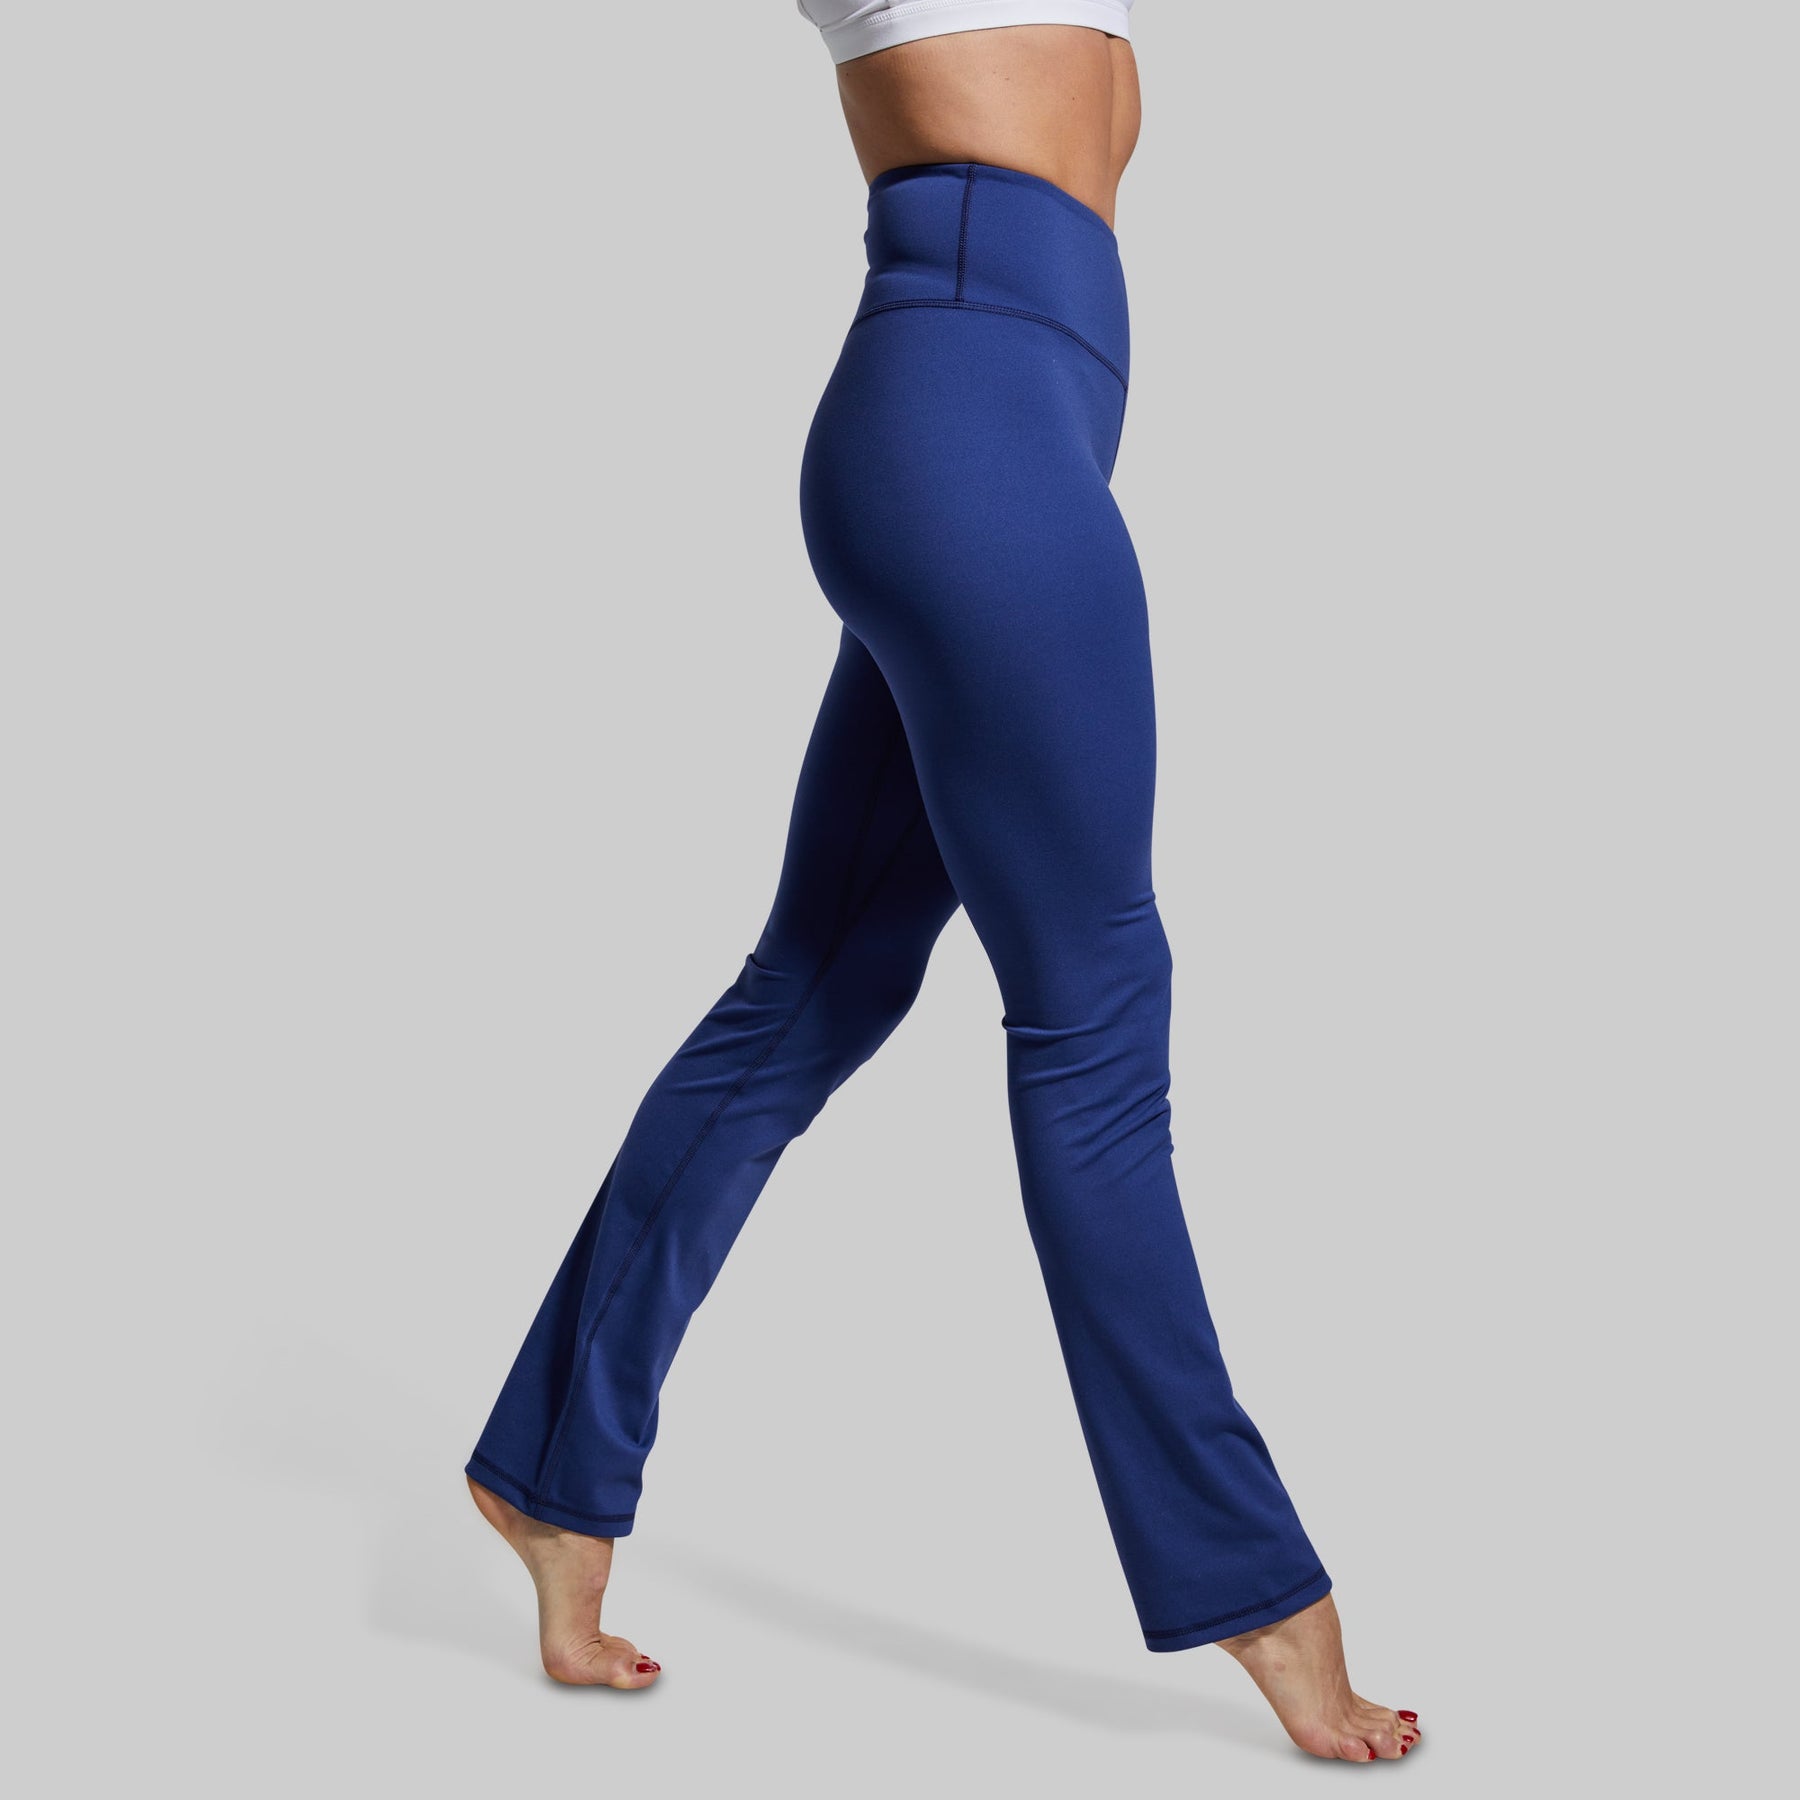  espidoo womens Classic Yoga Pants, Length Dark Blue +